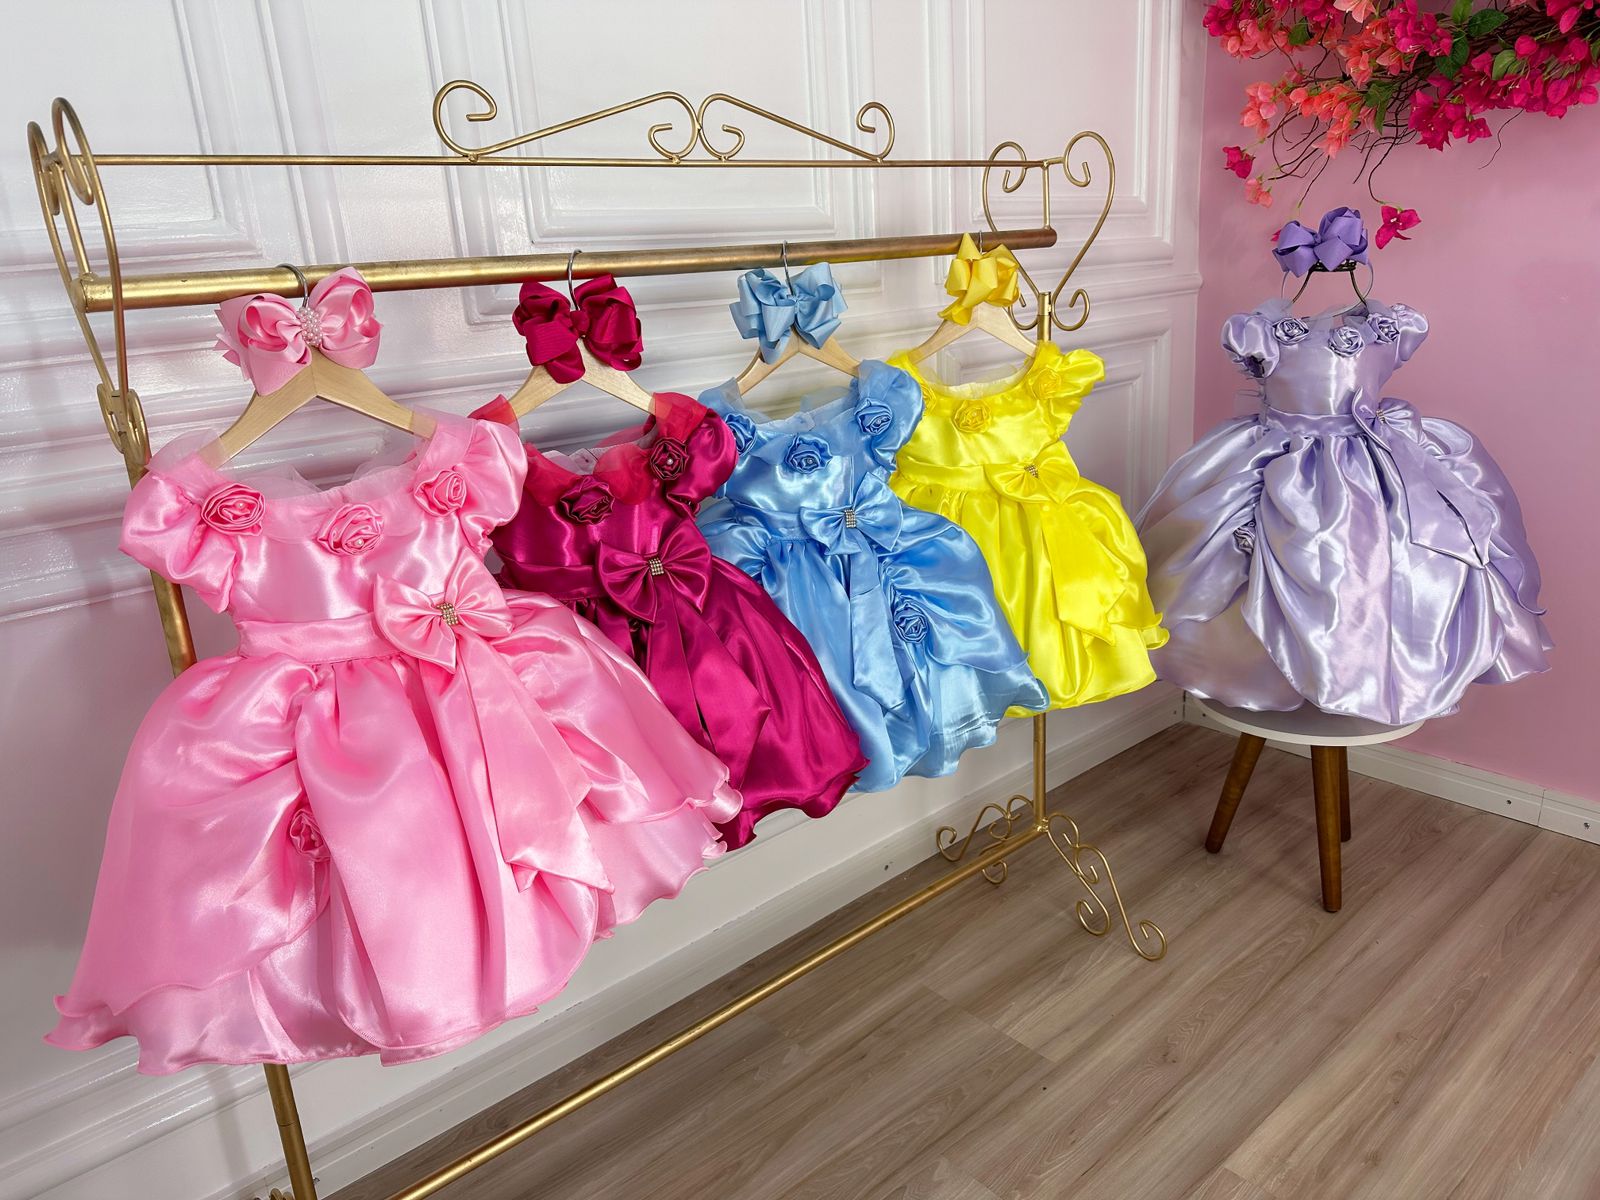 Vestido Infantil Princesa Sofia Rapunzel Ariel Lilás Rodado - Tio